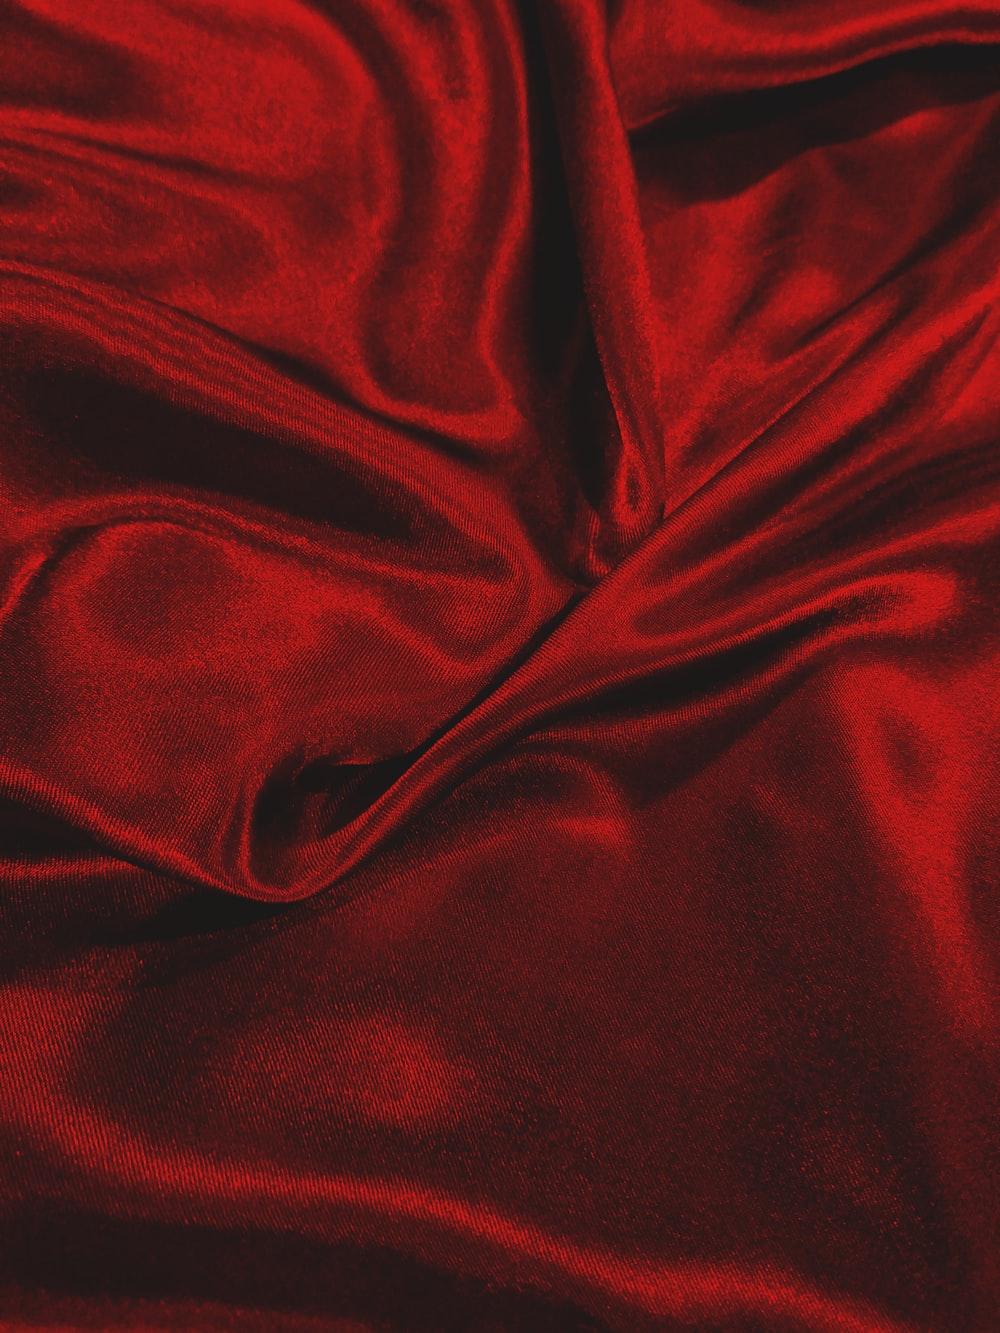 Baddie Wallpaper Red / Aesthetic Period Aesthetic Iphone ...